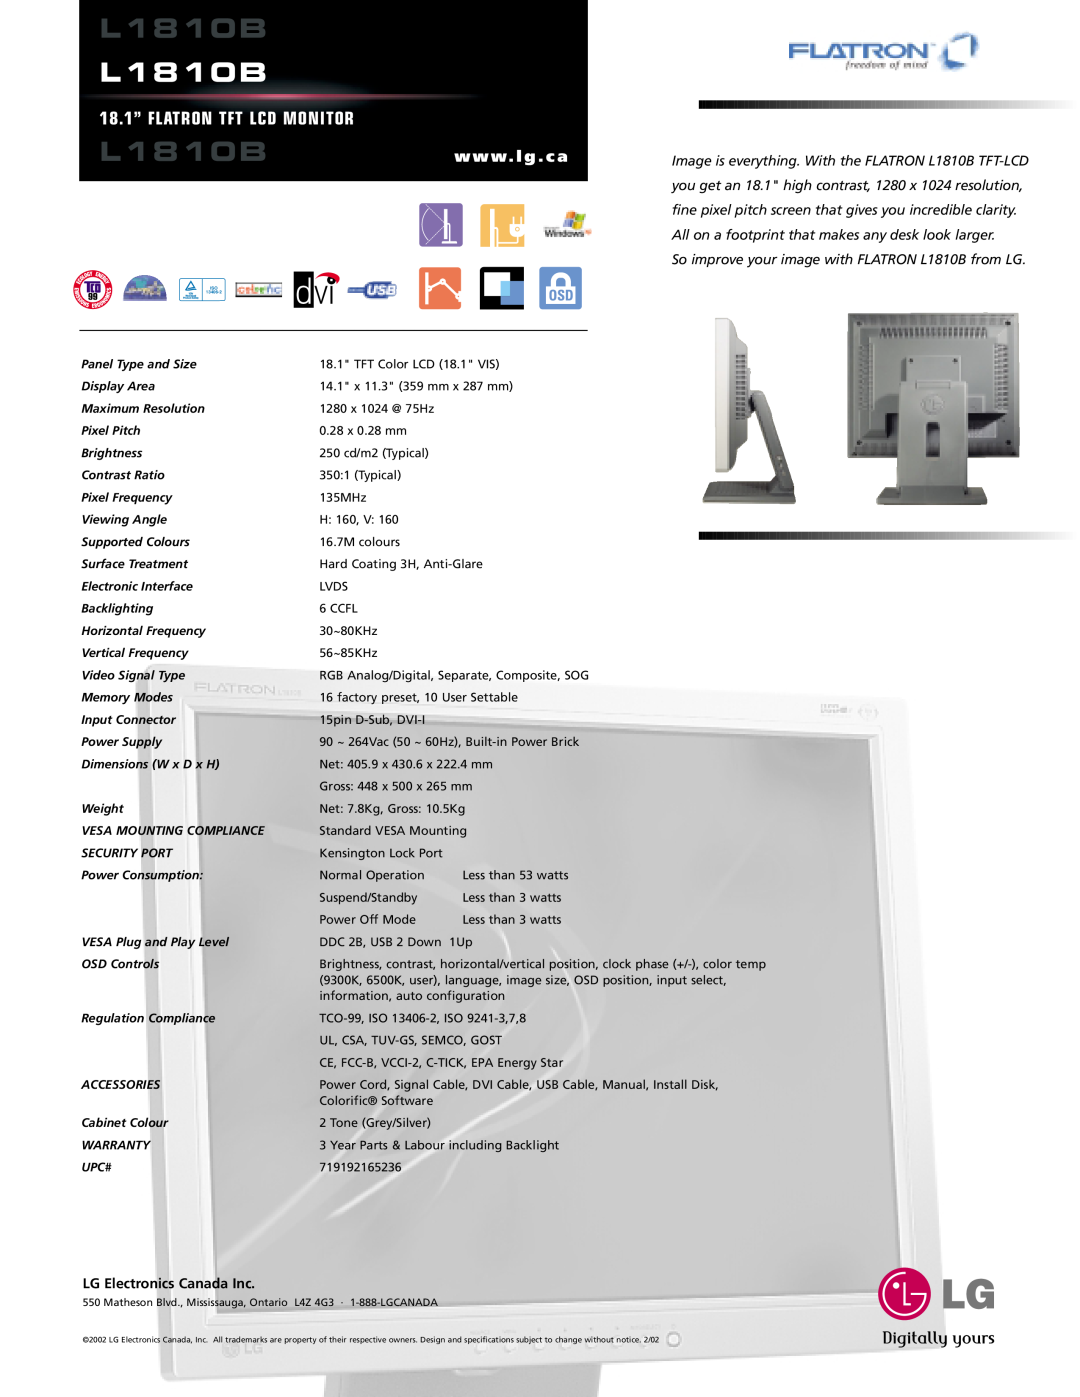 LG Electronics L1810B 18.1” FLATRON TFT LCD MONITOR, w w w. l g . c a, All on a footprint that makes any desk look larger 